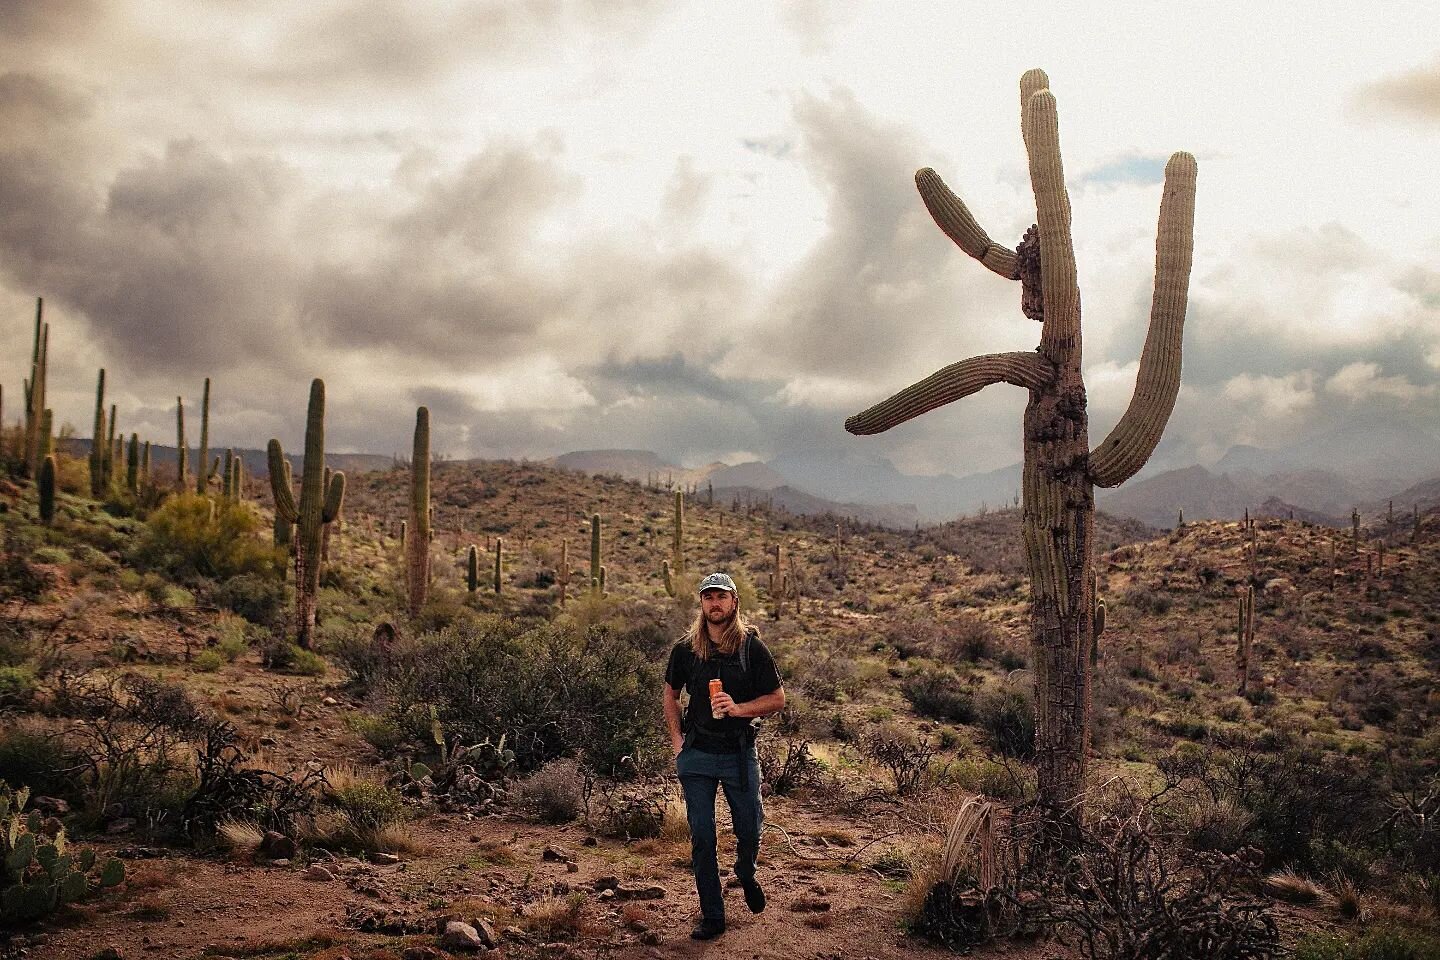 Superstition Wilderness🌵
.
.
.
#hiking #outdoors #superstitionmountains #desert #lbphotocinema #arizona #azphotographer